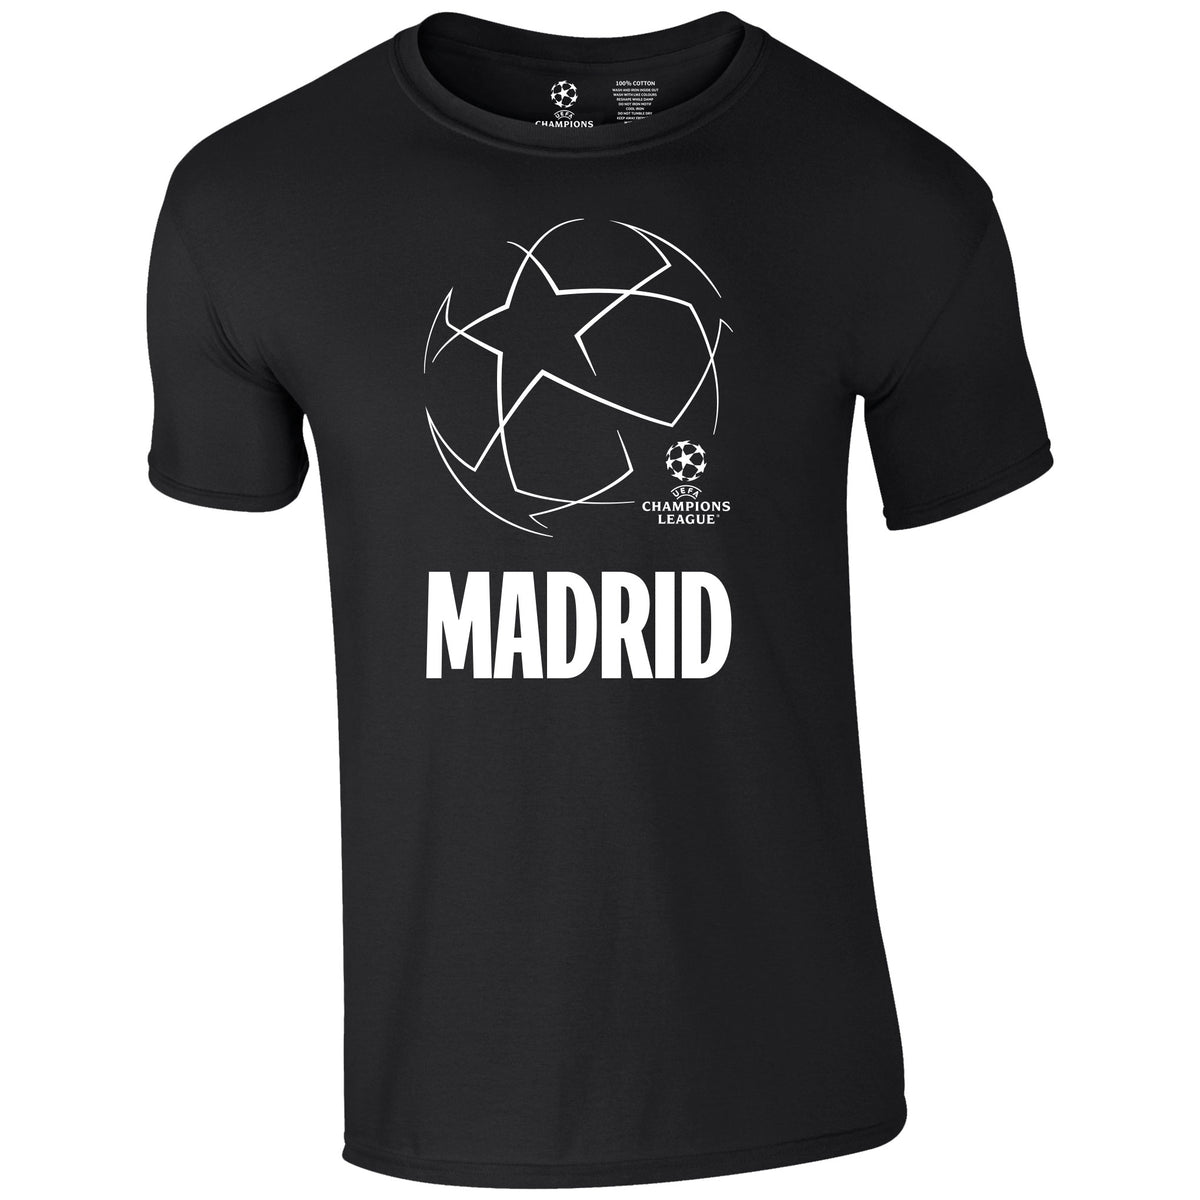 Champions League Starball Madrid City T-Shirt Black